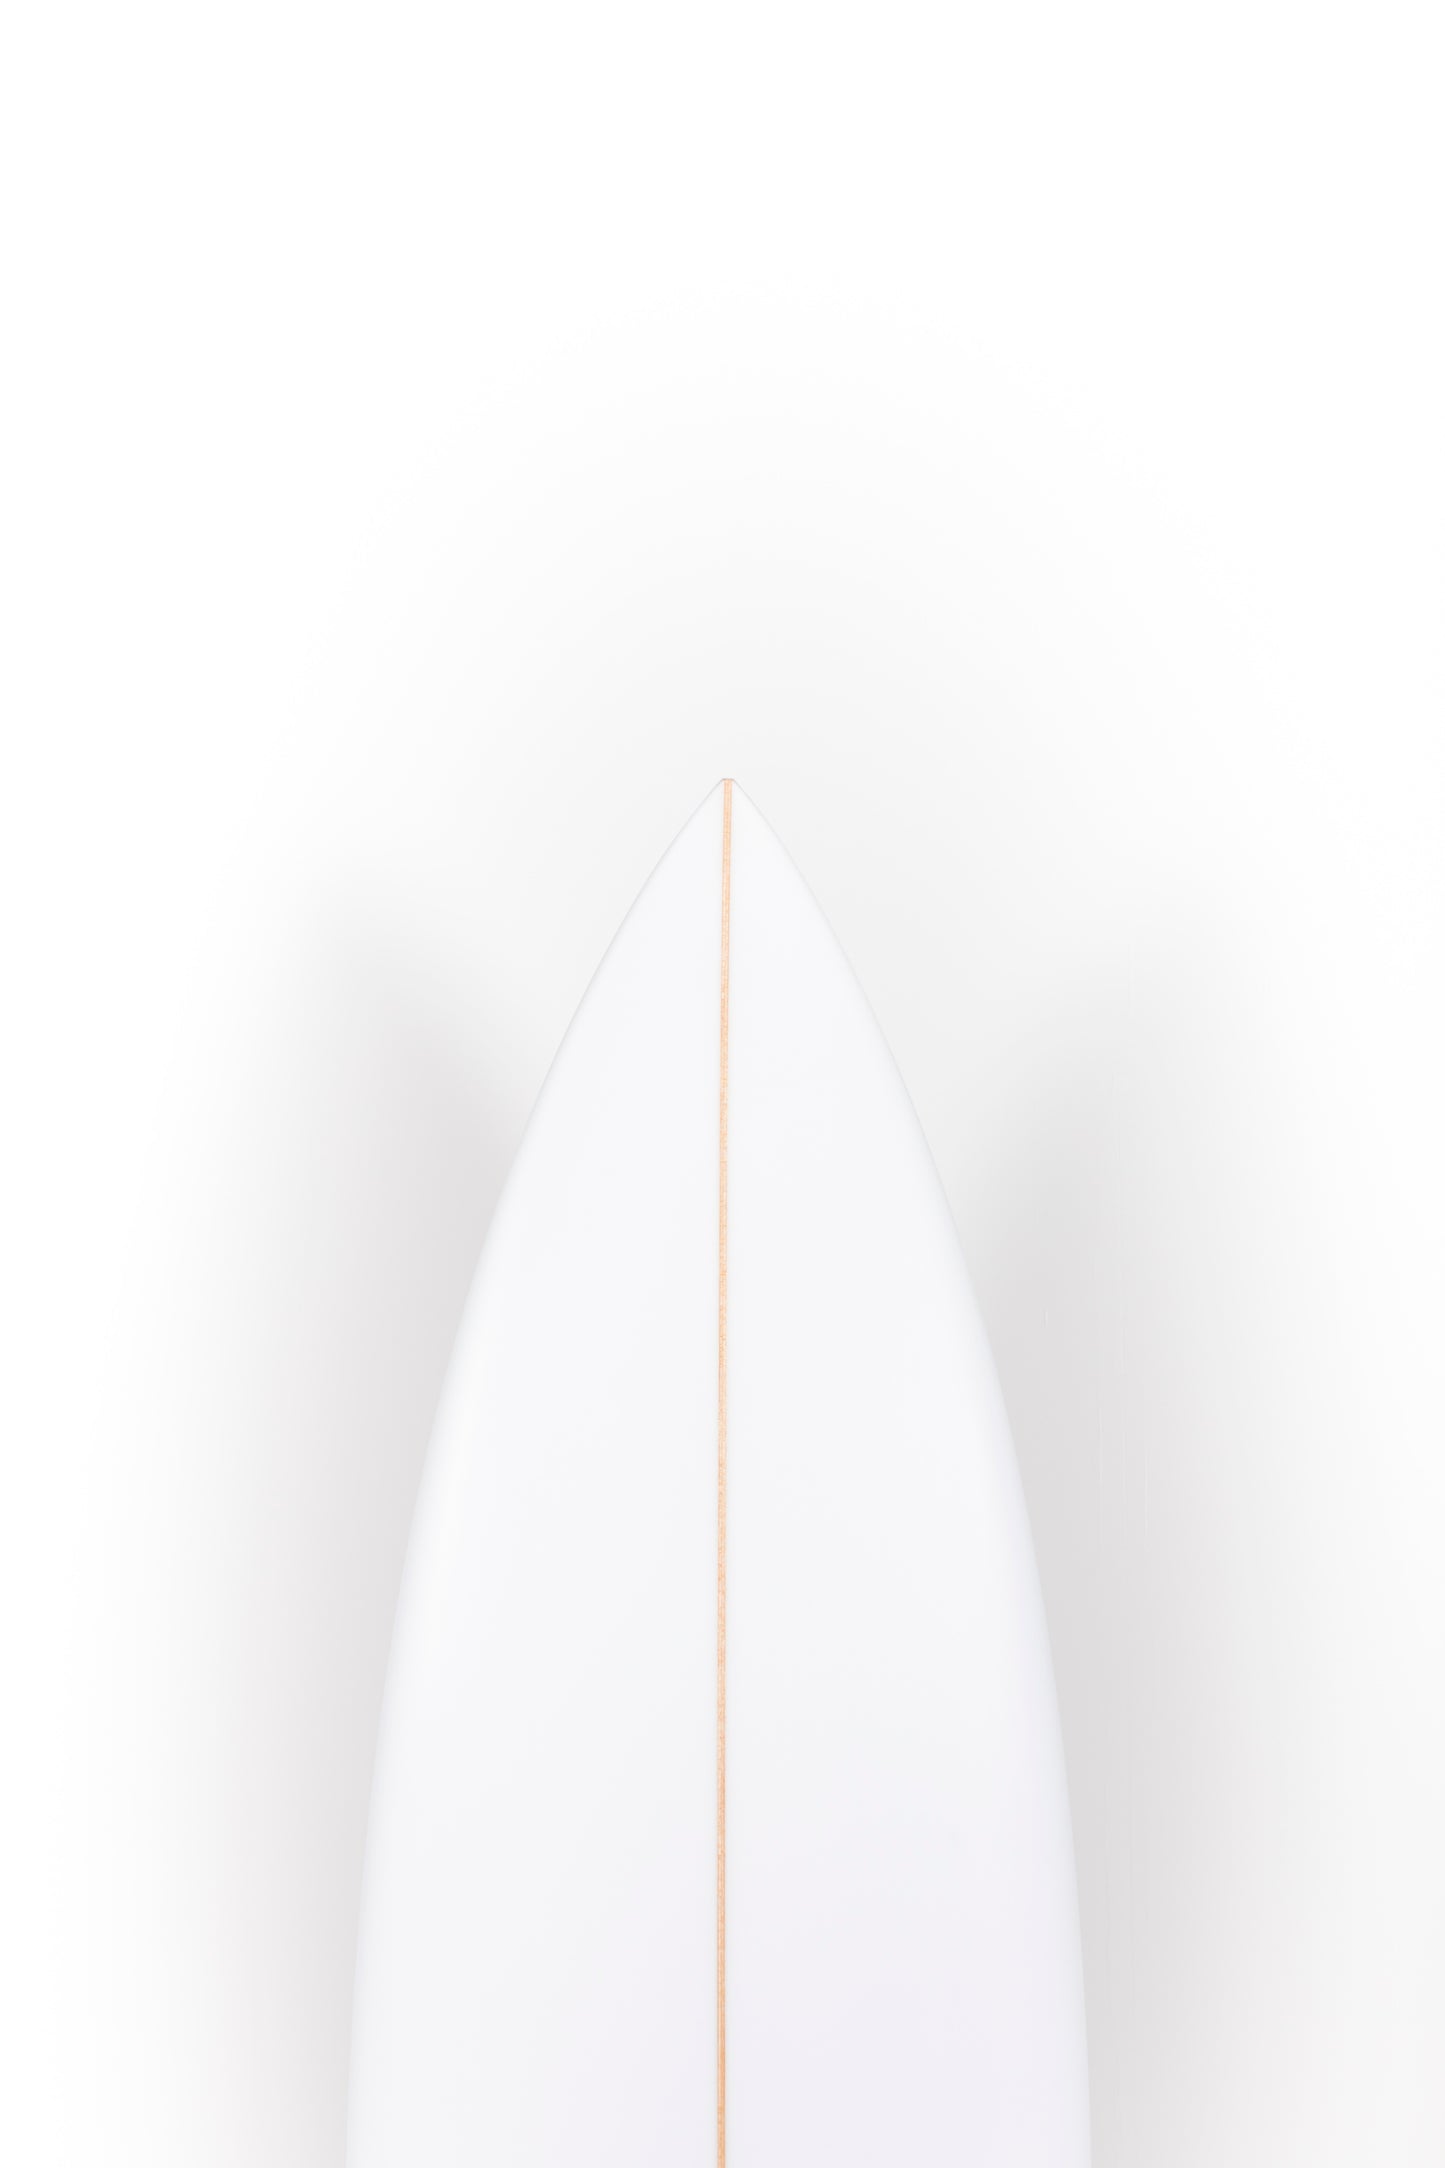 
                  
                    Pukas Surf Shop - Lost Surfboards - SUB DRIVER 2.0 by Matt Biolos - 6’1” x 19,75 x 2,44 - 31,5L - MH12601
                  
                